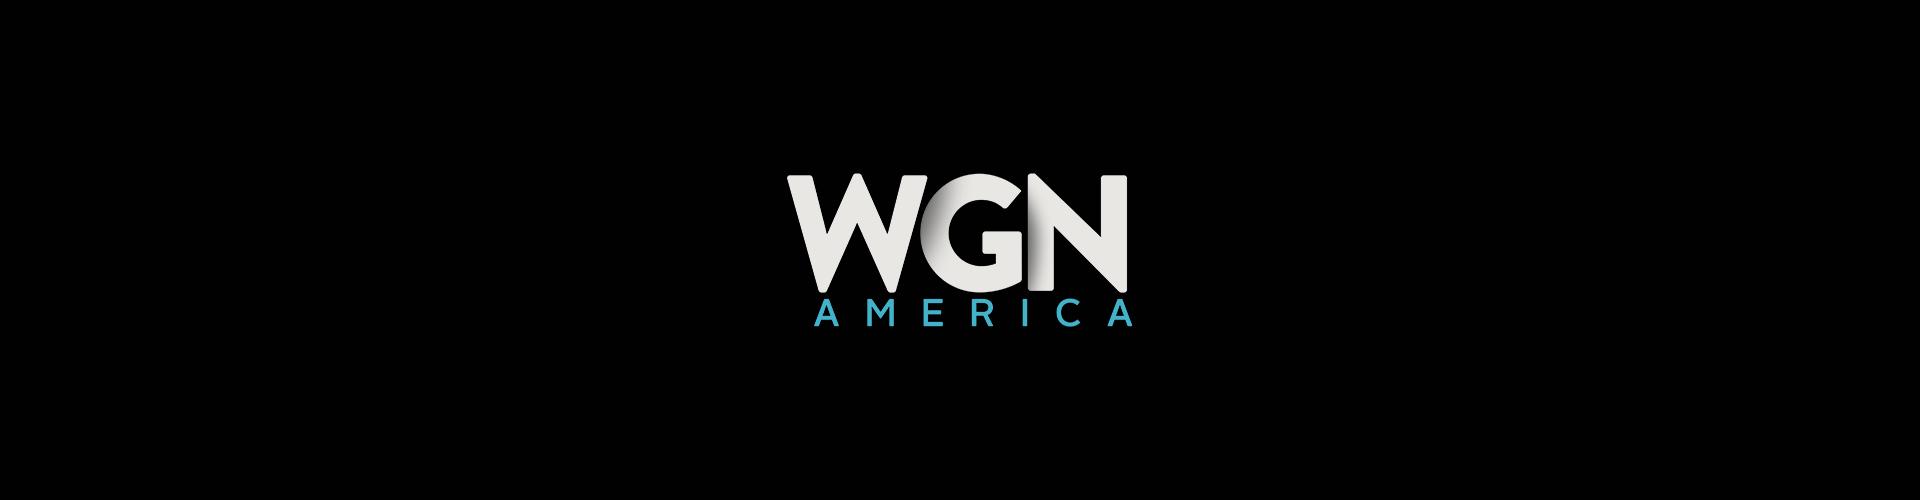 WGN America Logo - Tribune Media